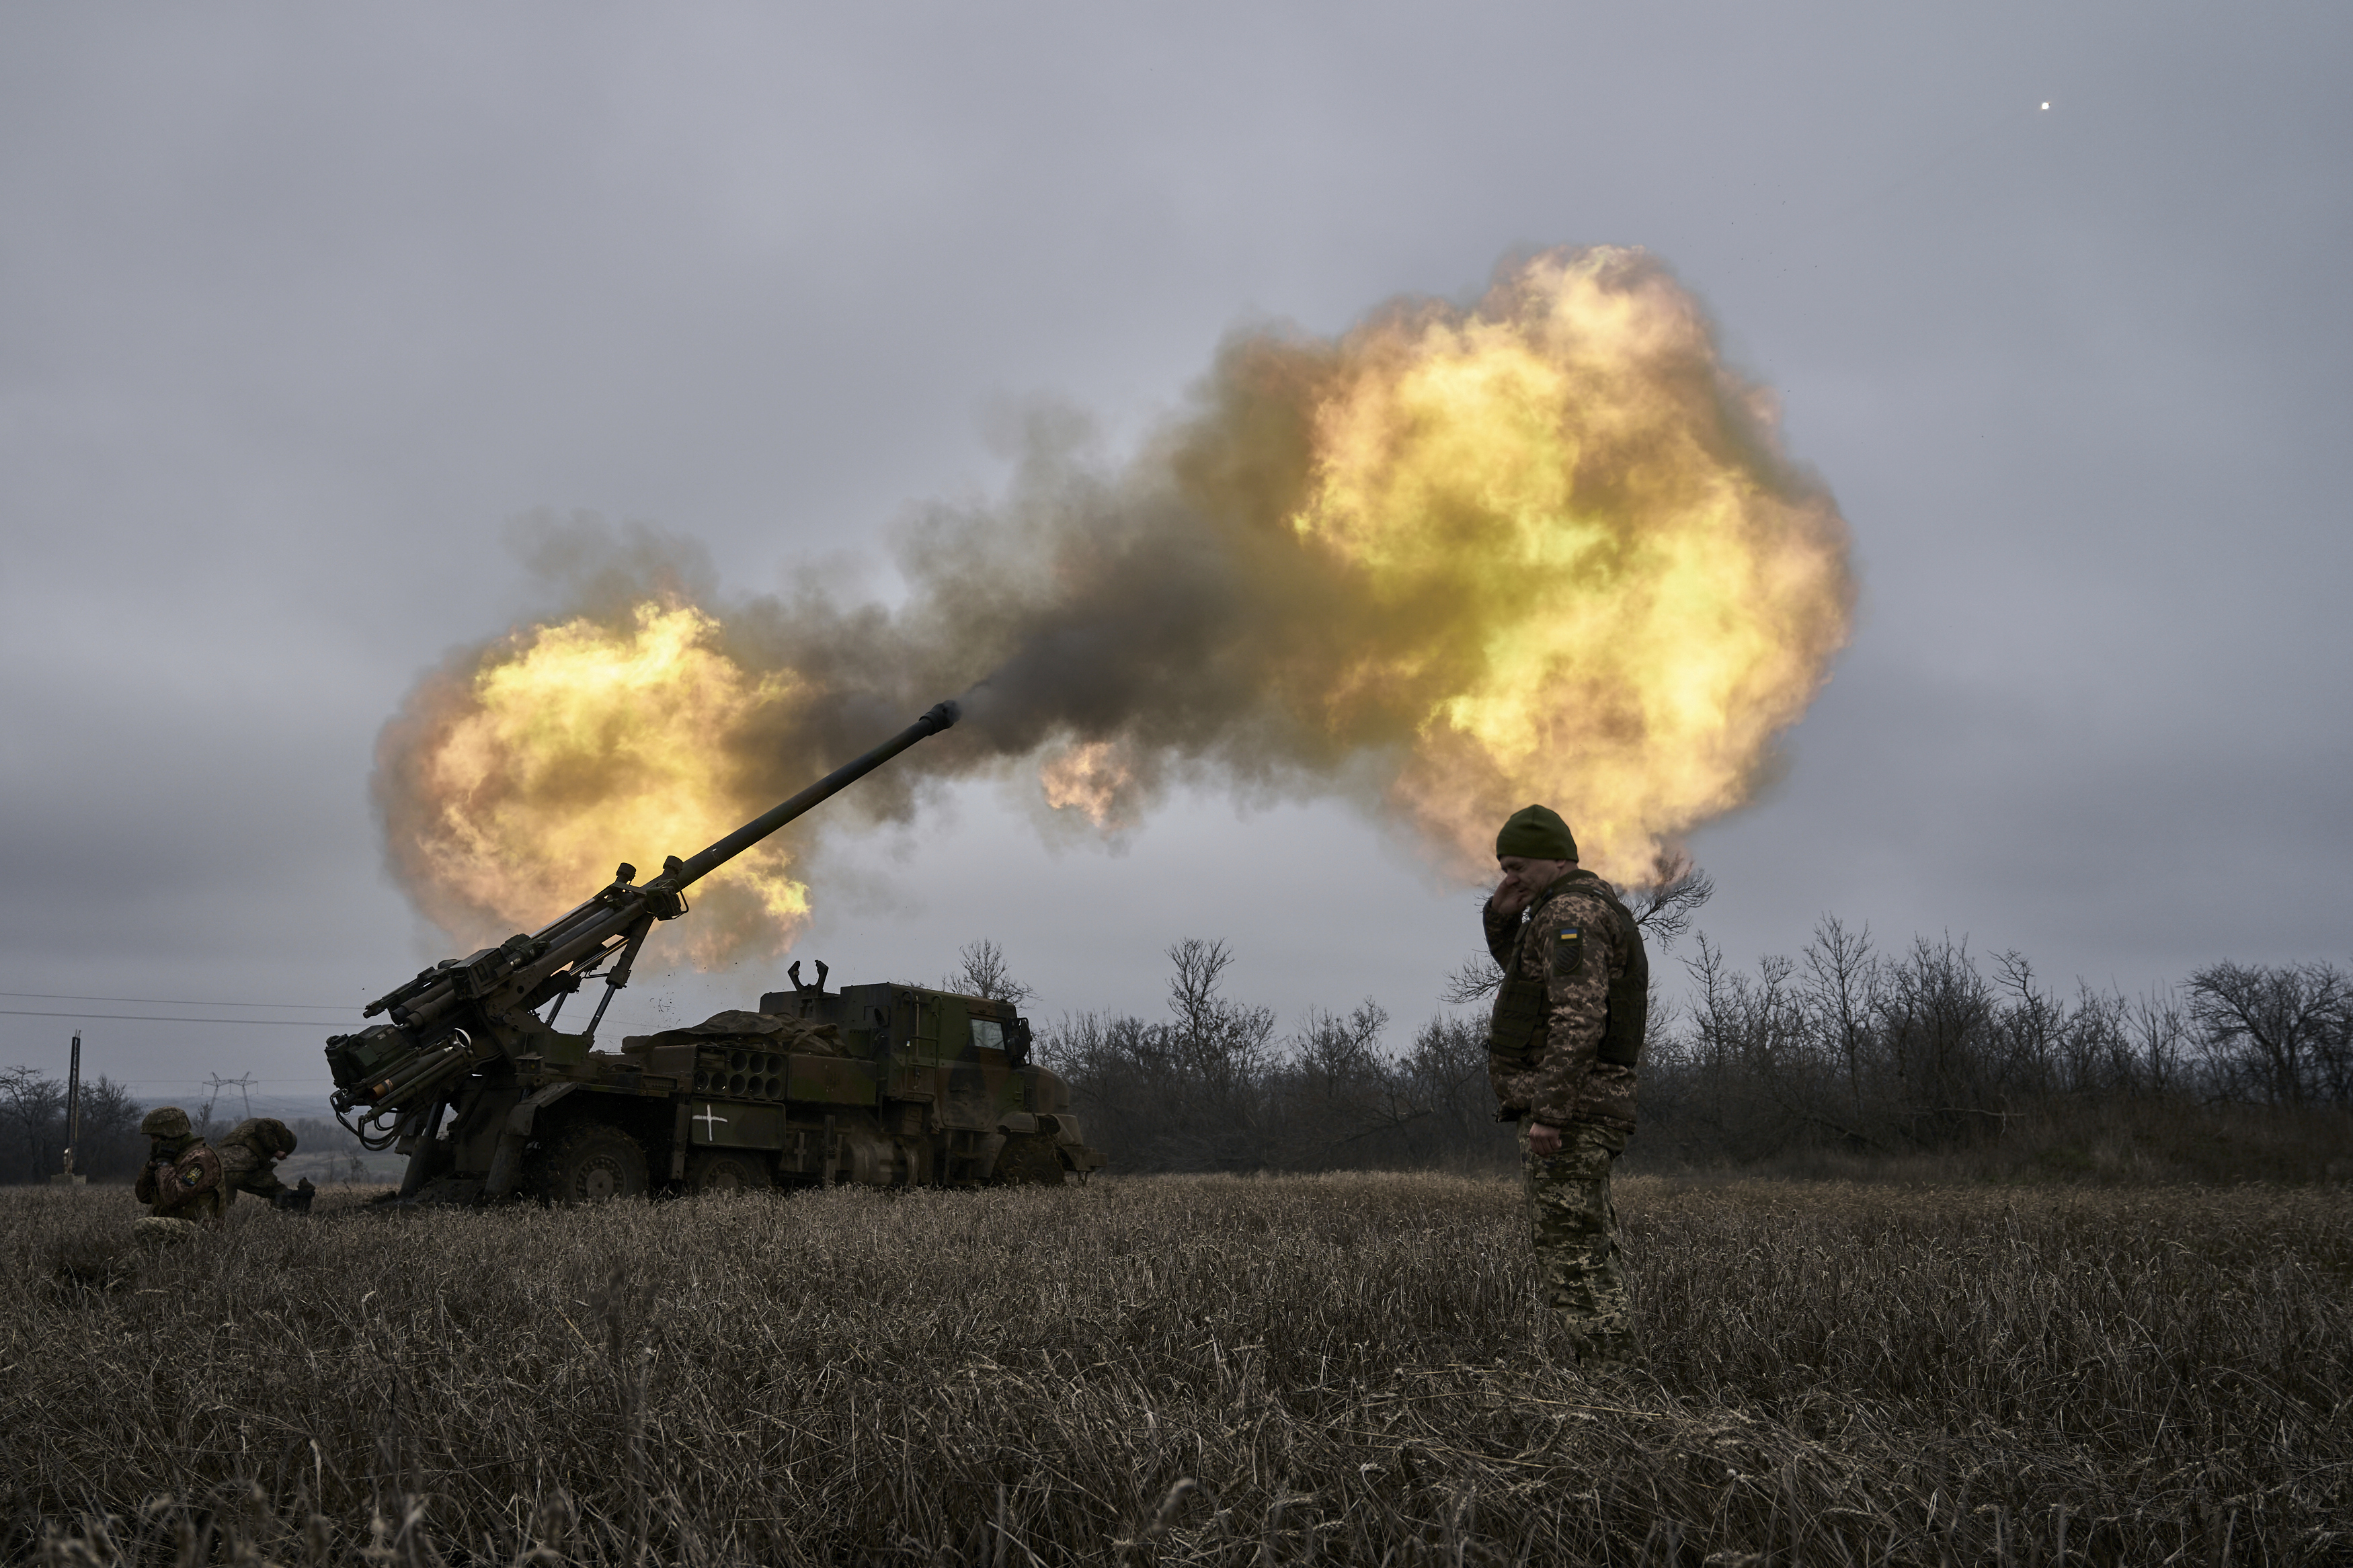 Putin advierte que enviar tropas occidentales a Ucrania corre el riesgo de una guerra nuclear global